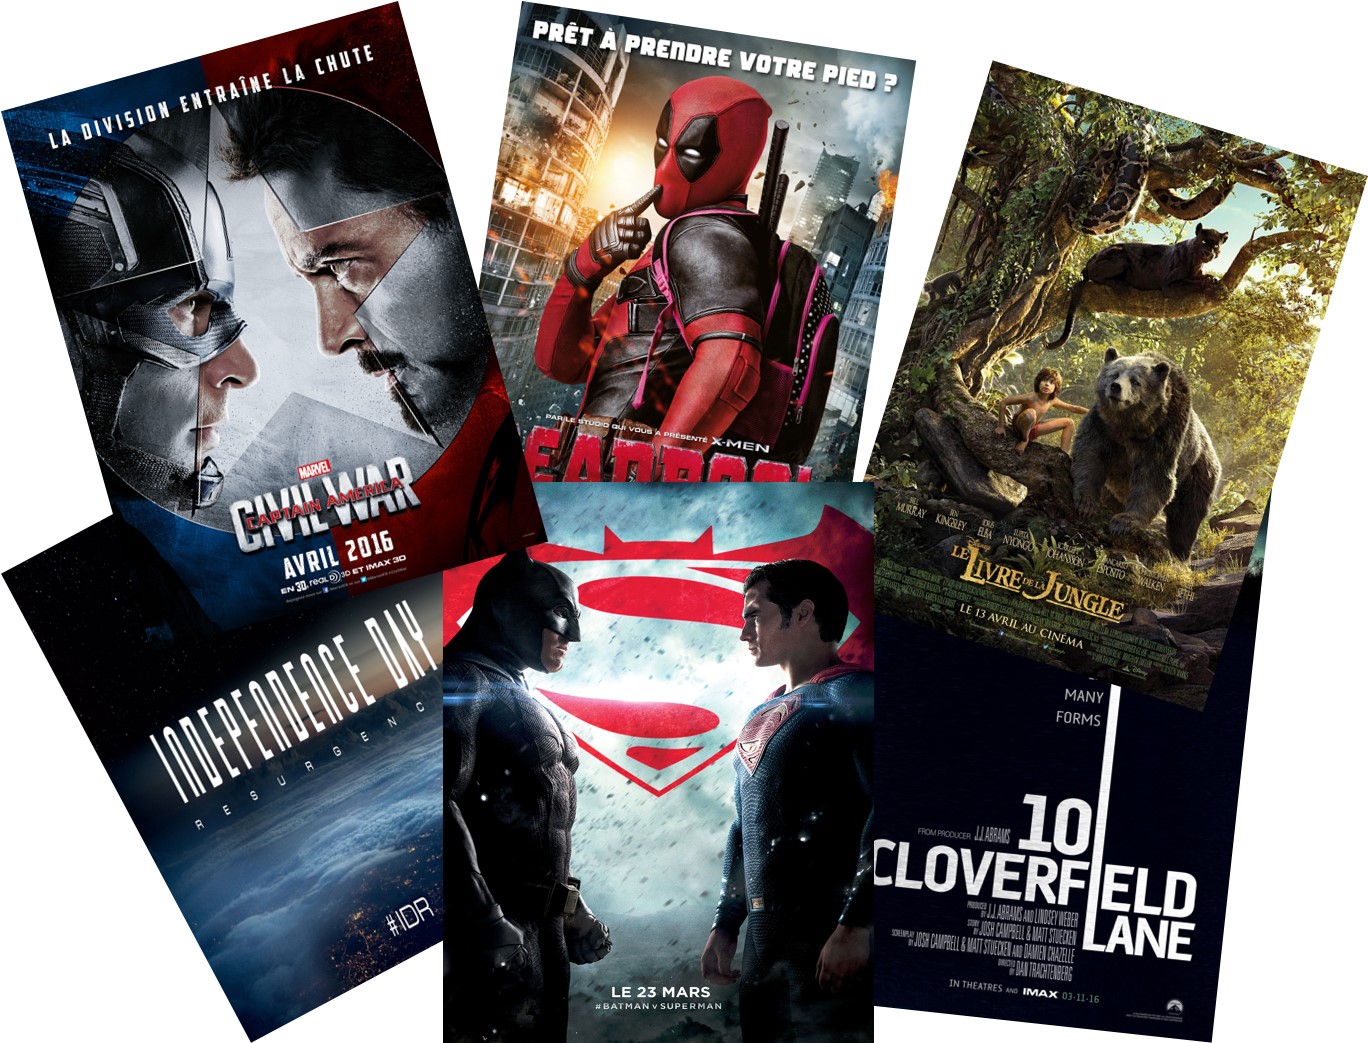 SUPERBOWL 2016 - Visuel bandes-annonces films Blockbusters 2016 - copyright Go with the Blog